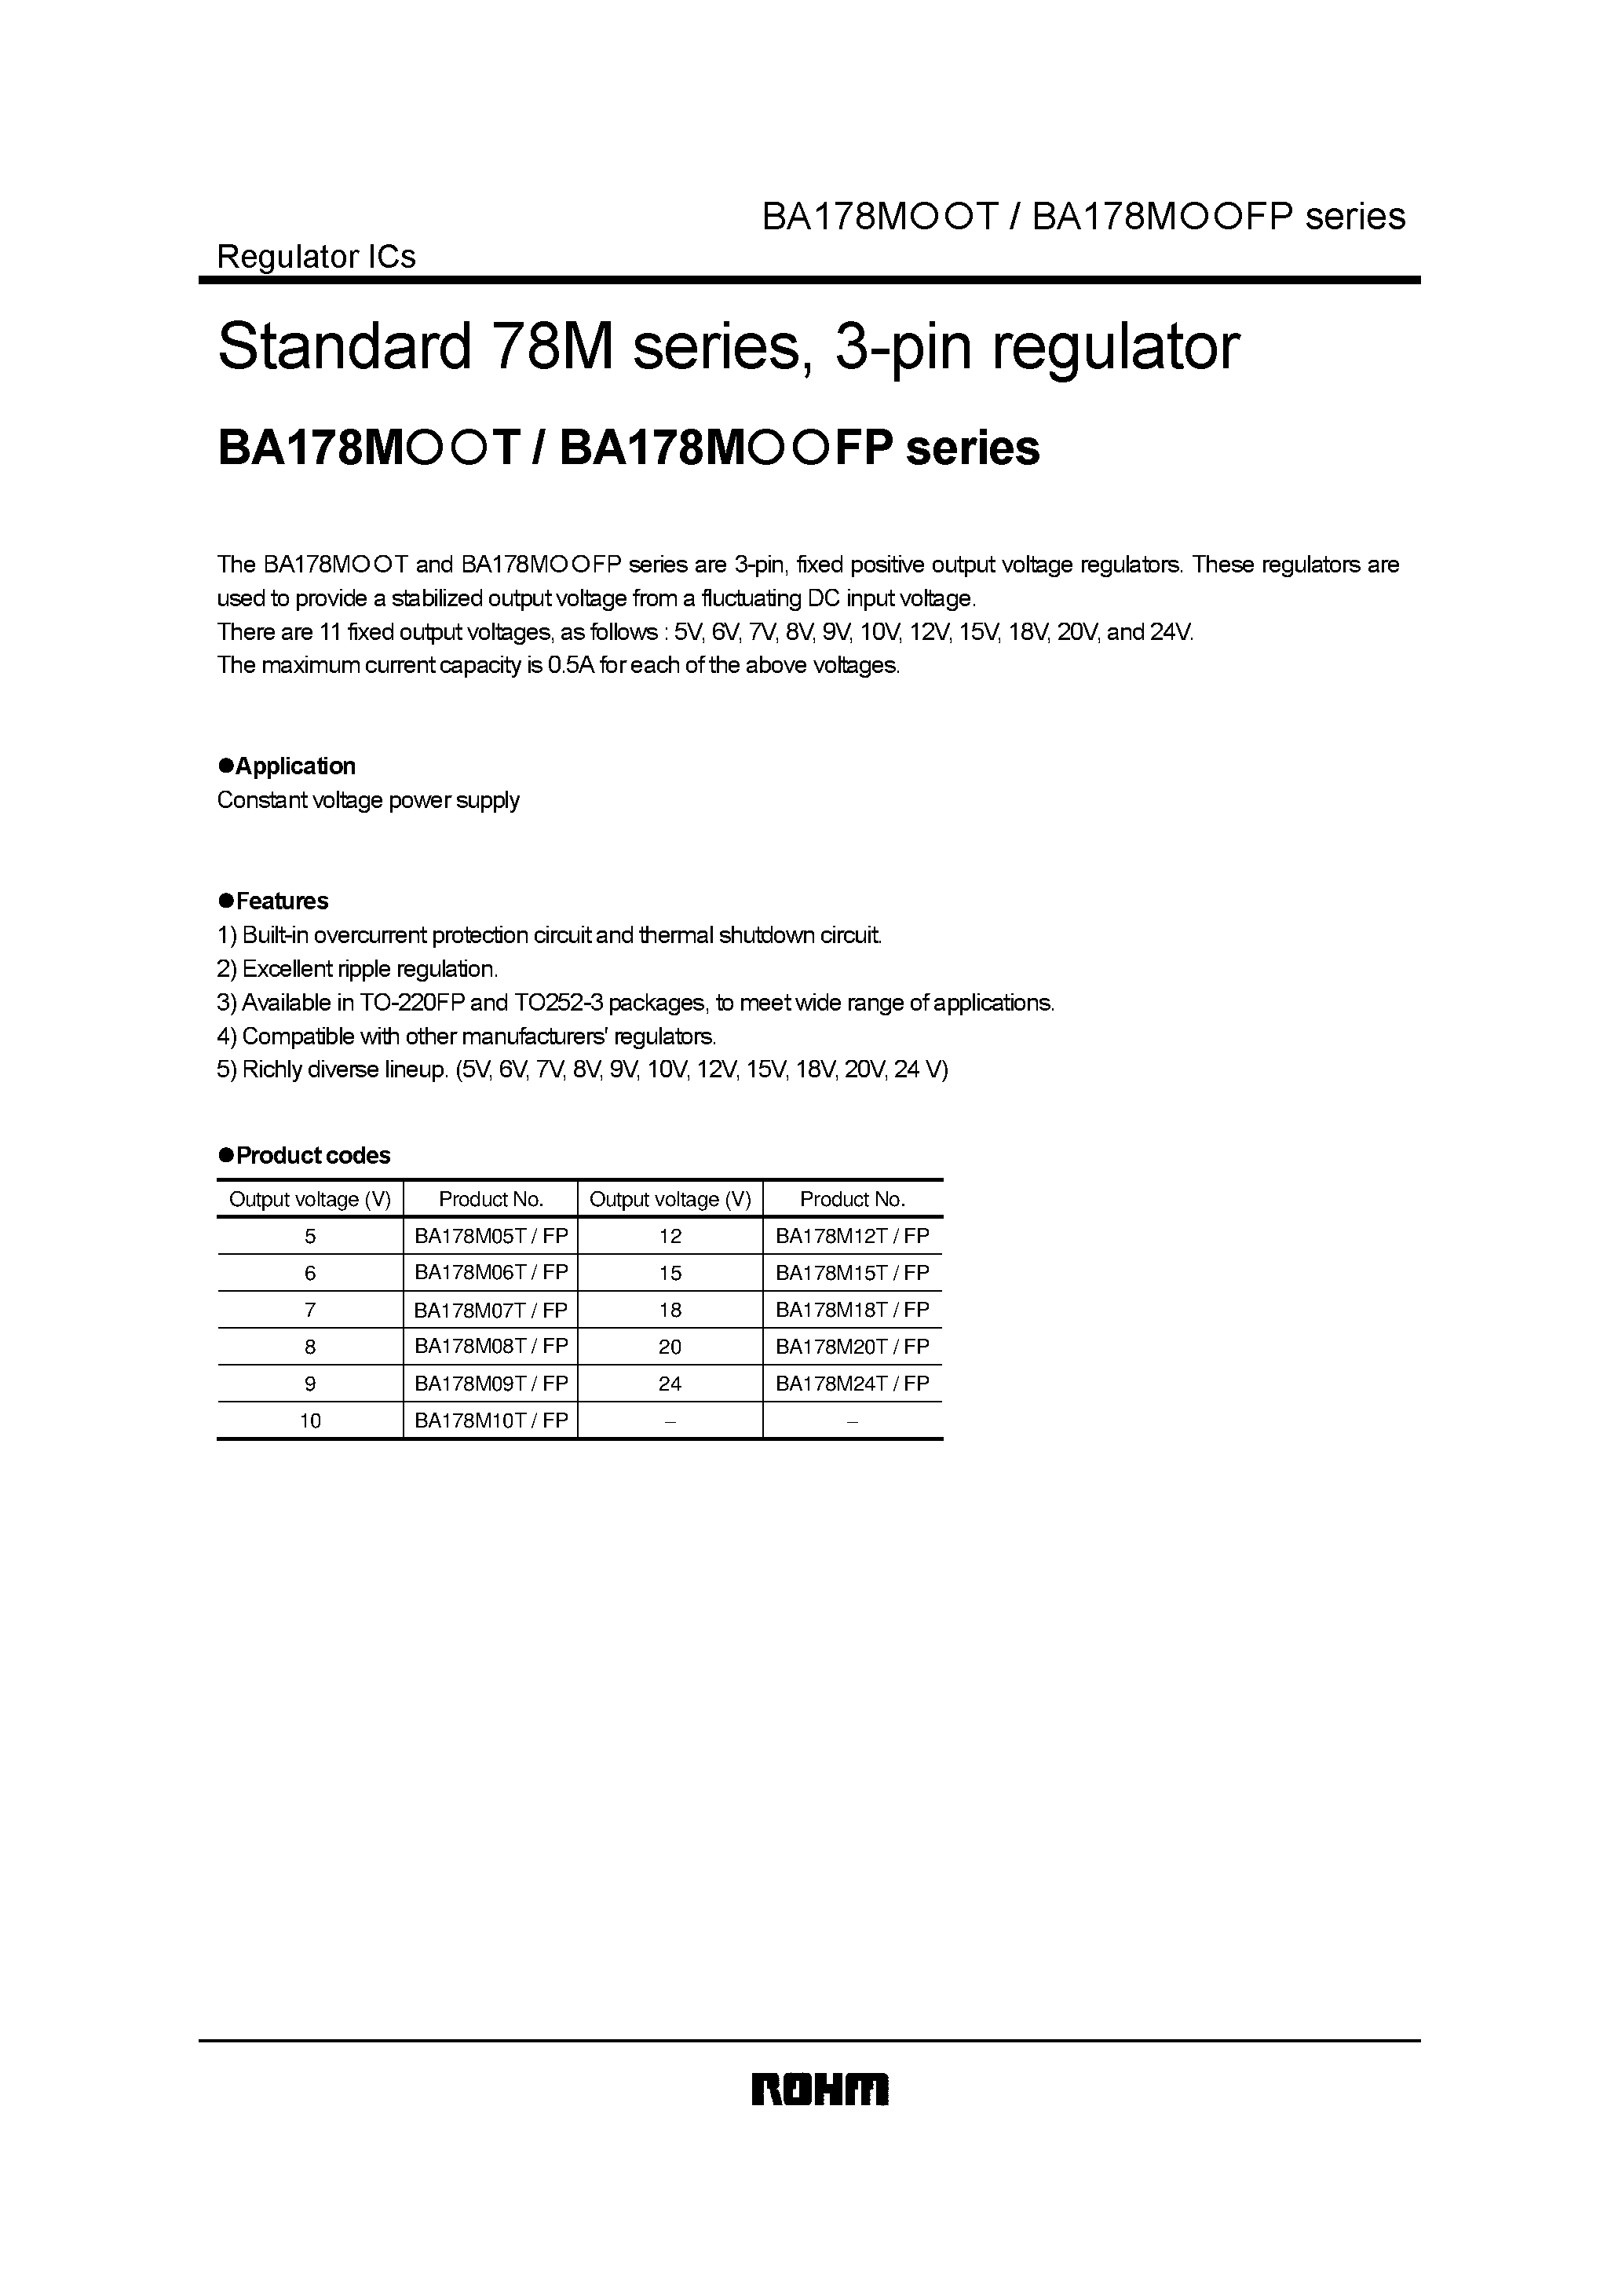 Даташит BA178M18T - Standard 78M series/ 3-pin regulator страница 1